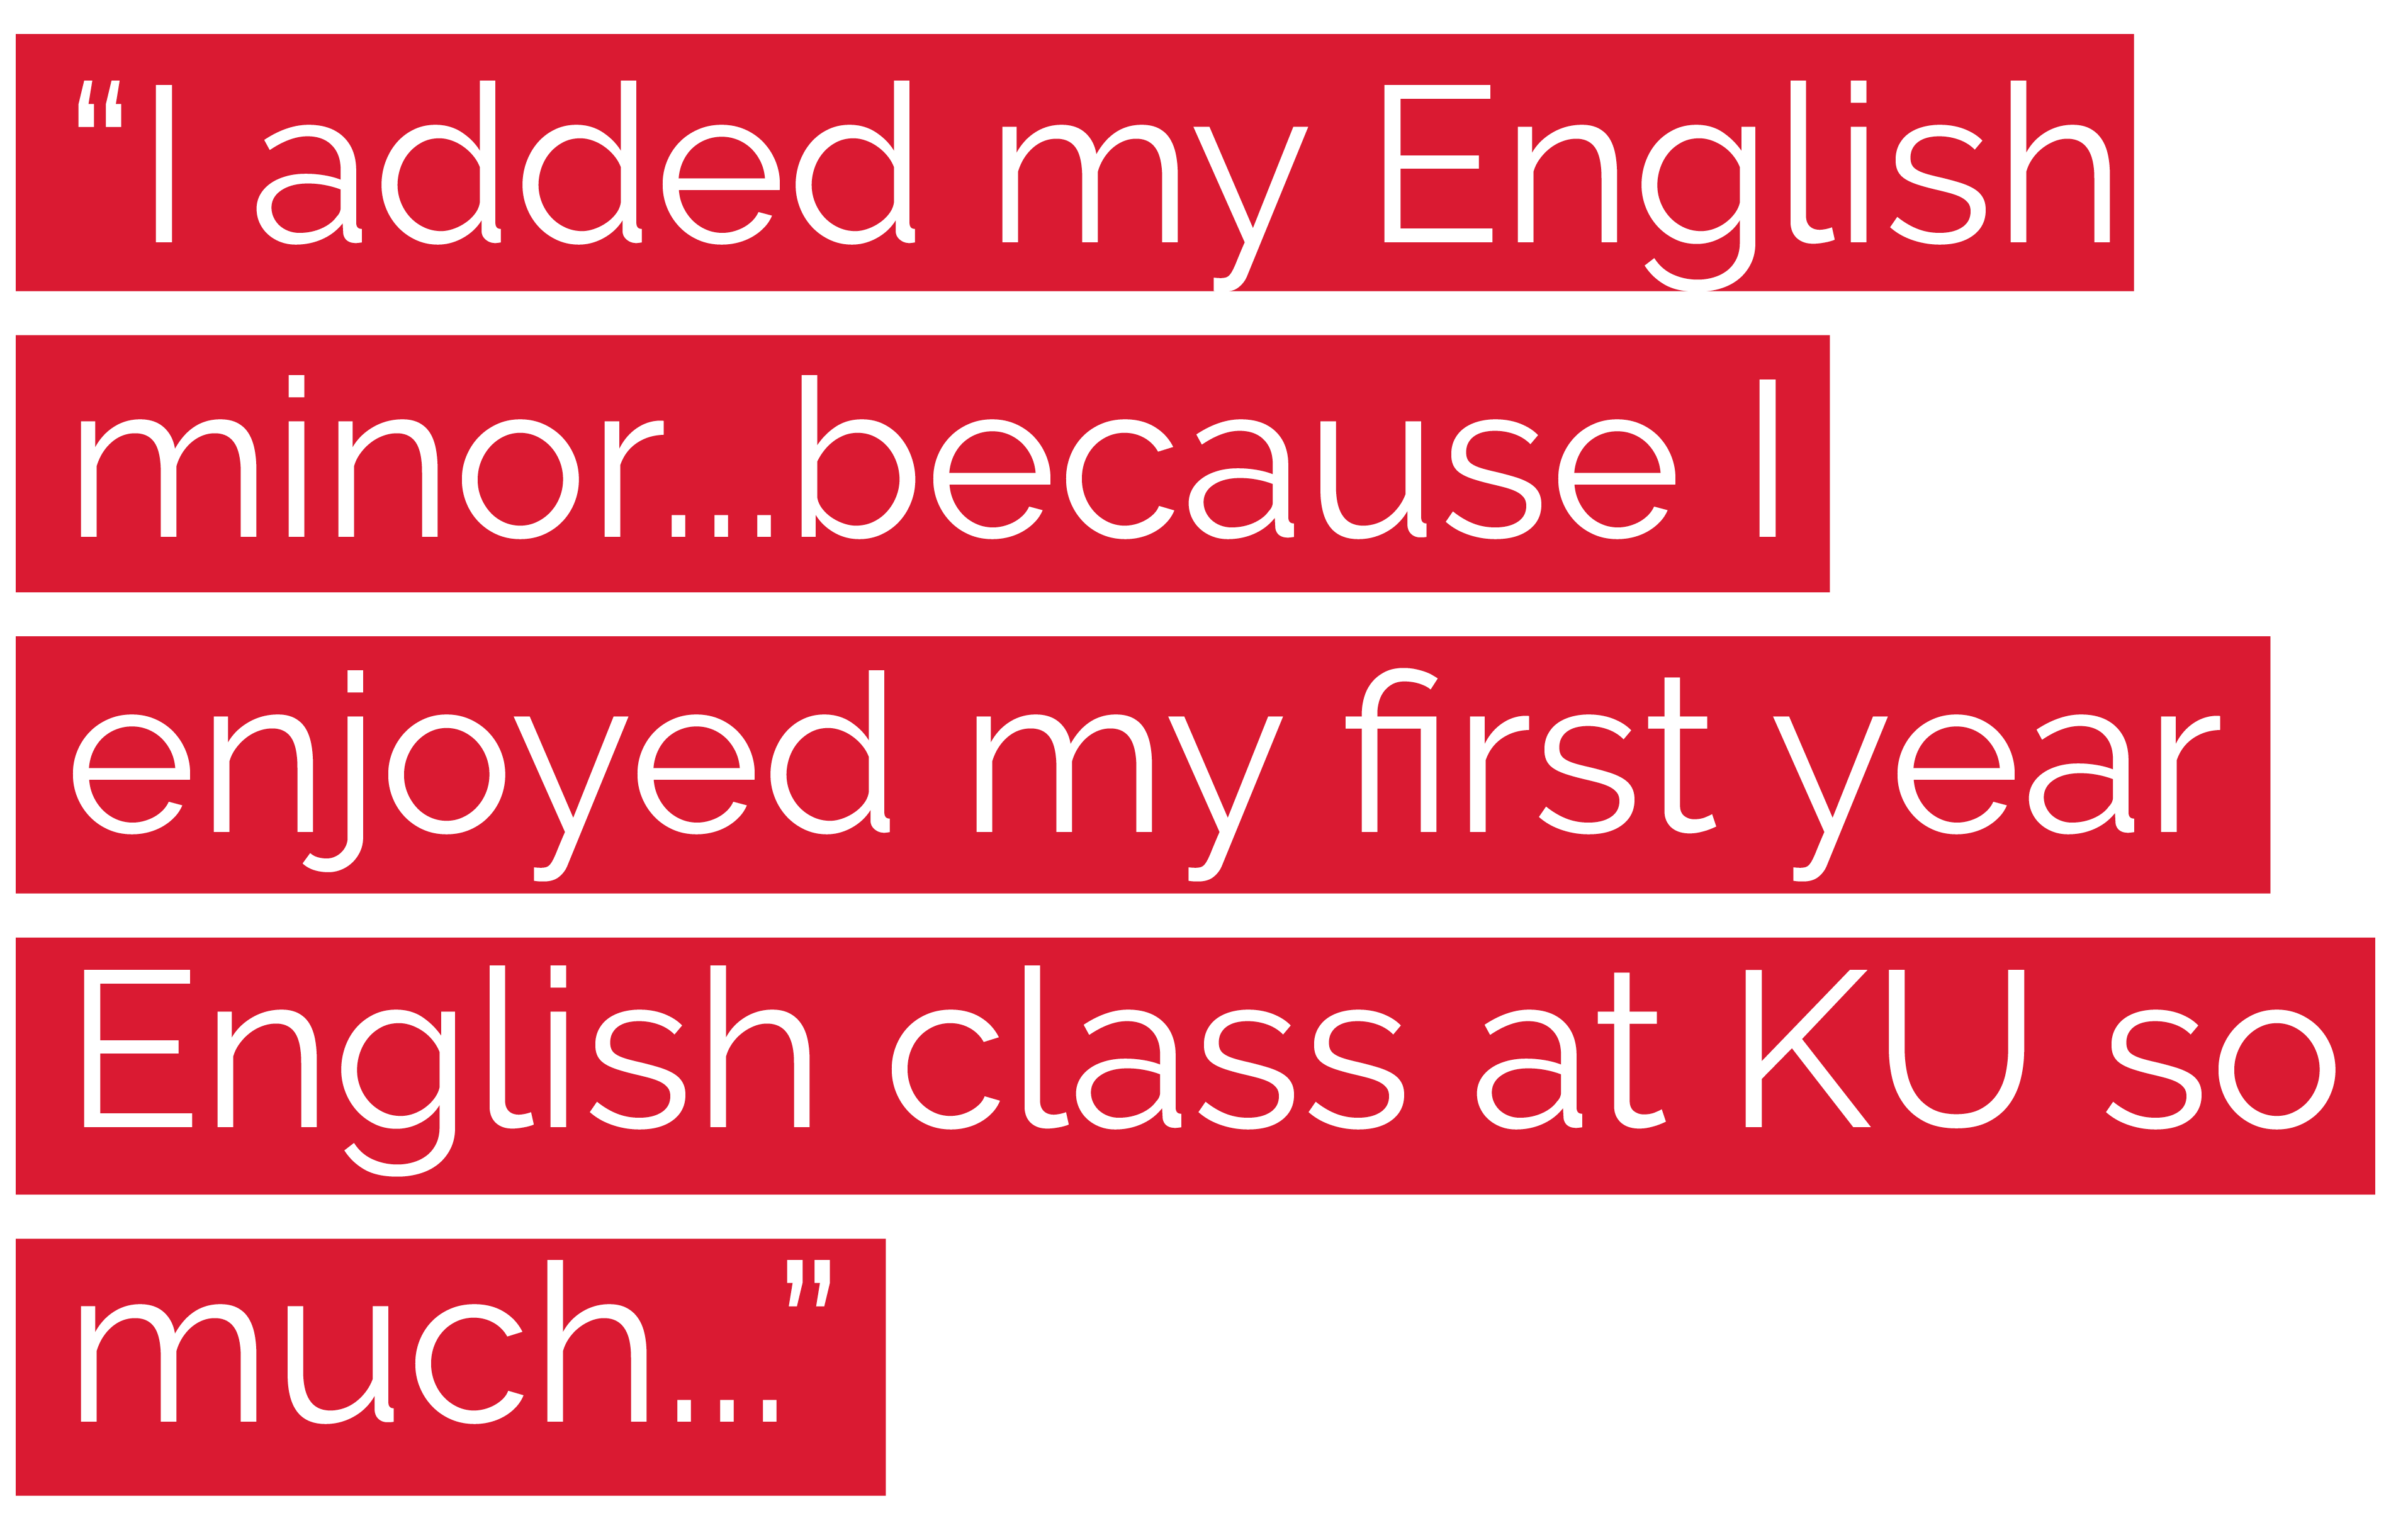 "I added my English minor...because I enjoyed my first year English class at KU so much..."